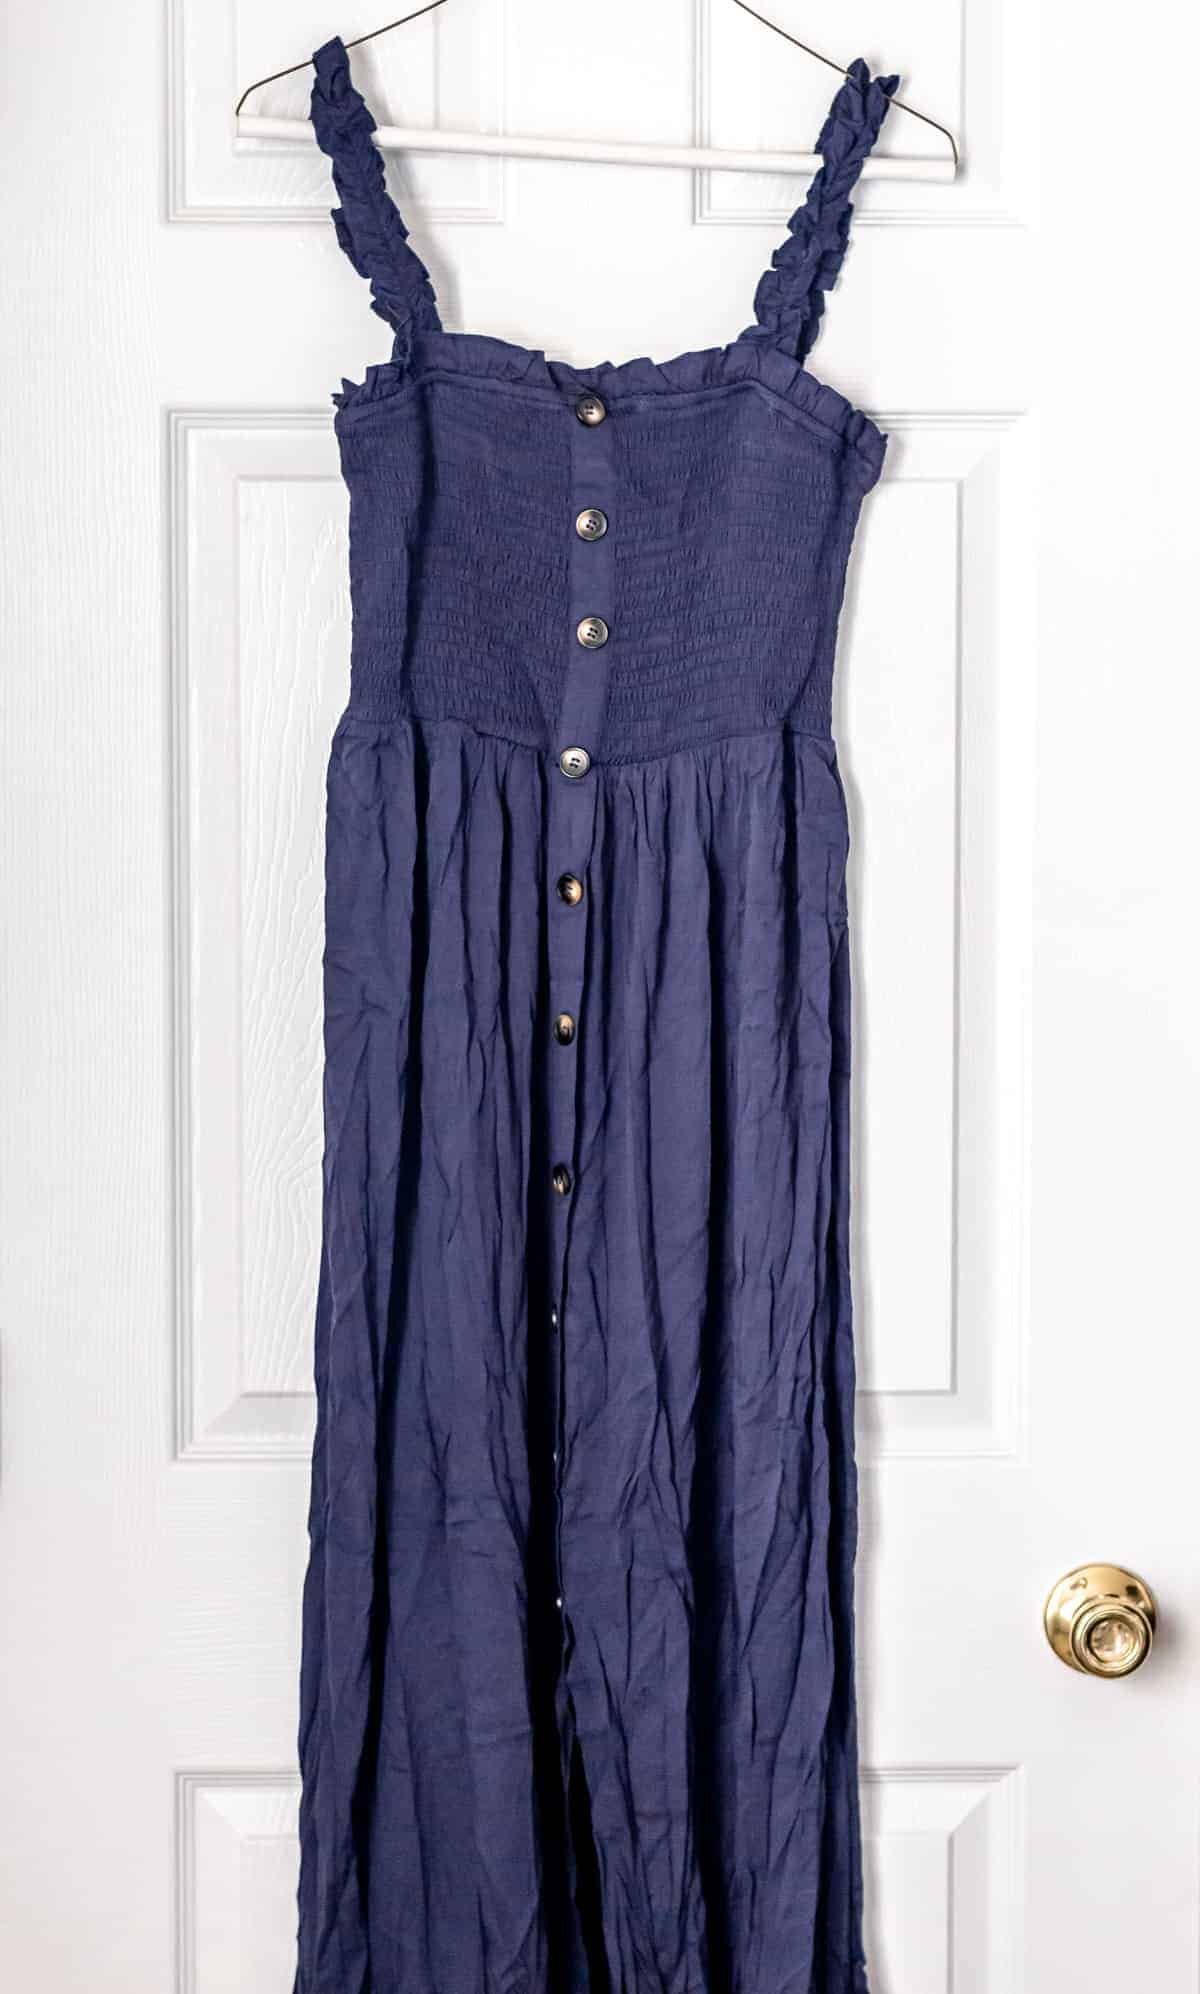 Button Front Shirred Split Cami Dress in dark blue on a hanger